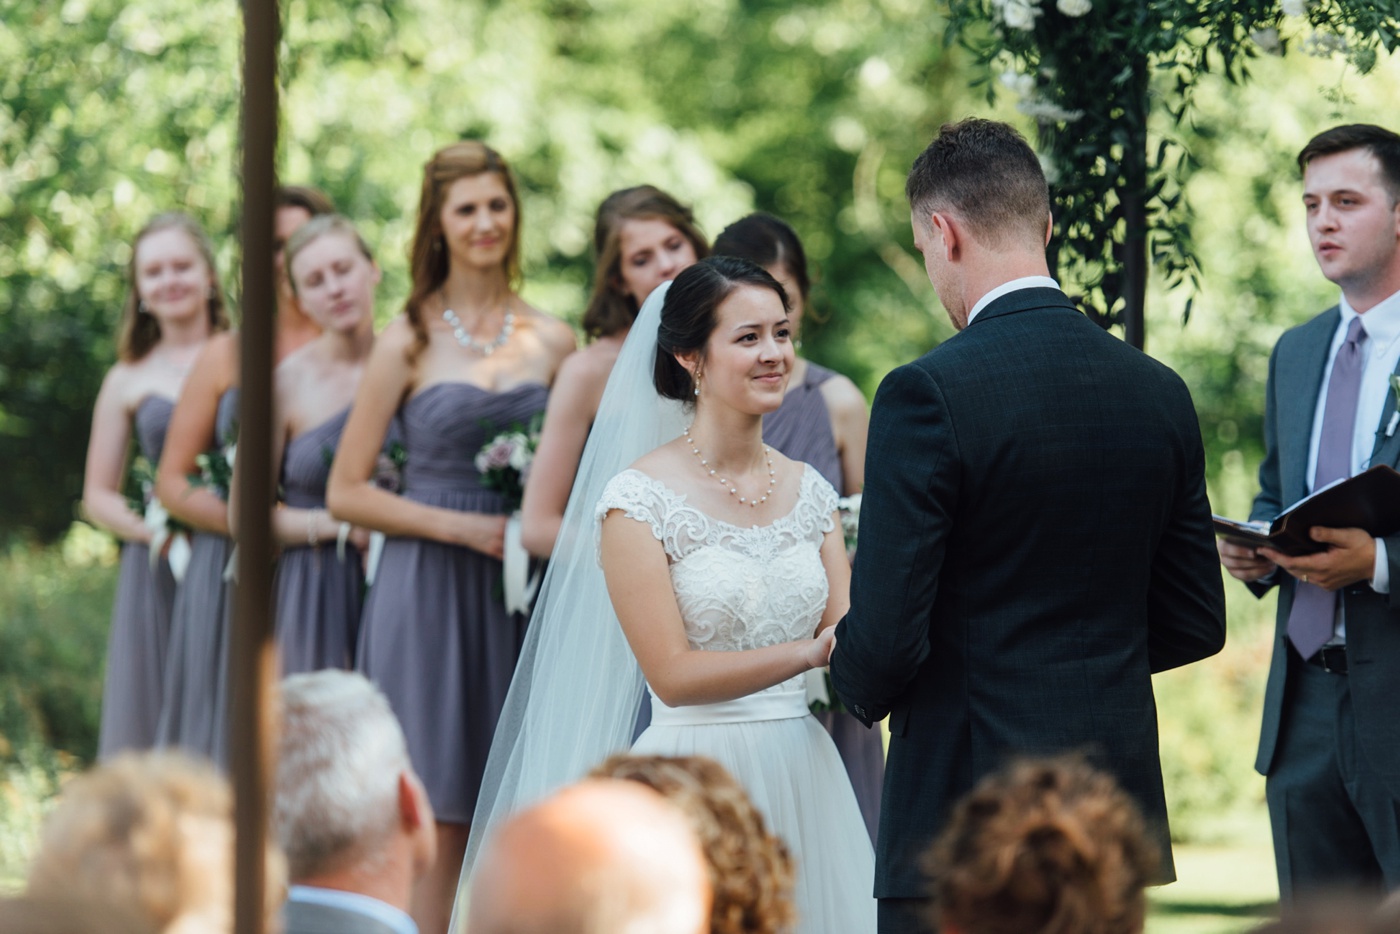 Liz + Matt - William Penn Inn - Gwynedd Pennsylvania Wedding Photographer - Alison Dunn Photography photo